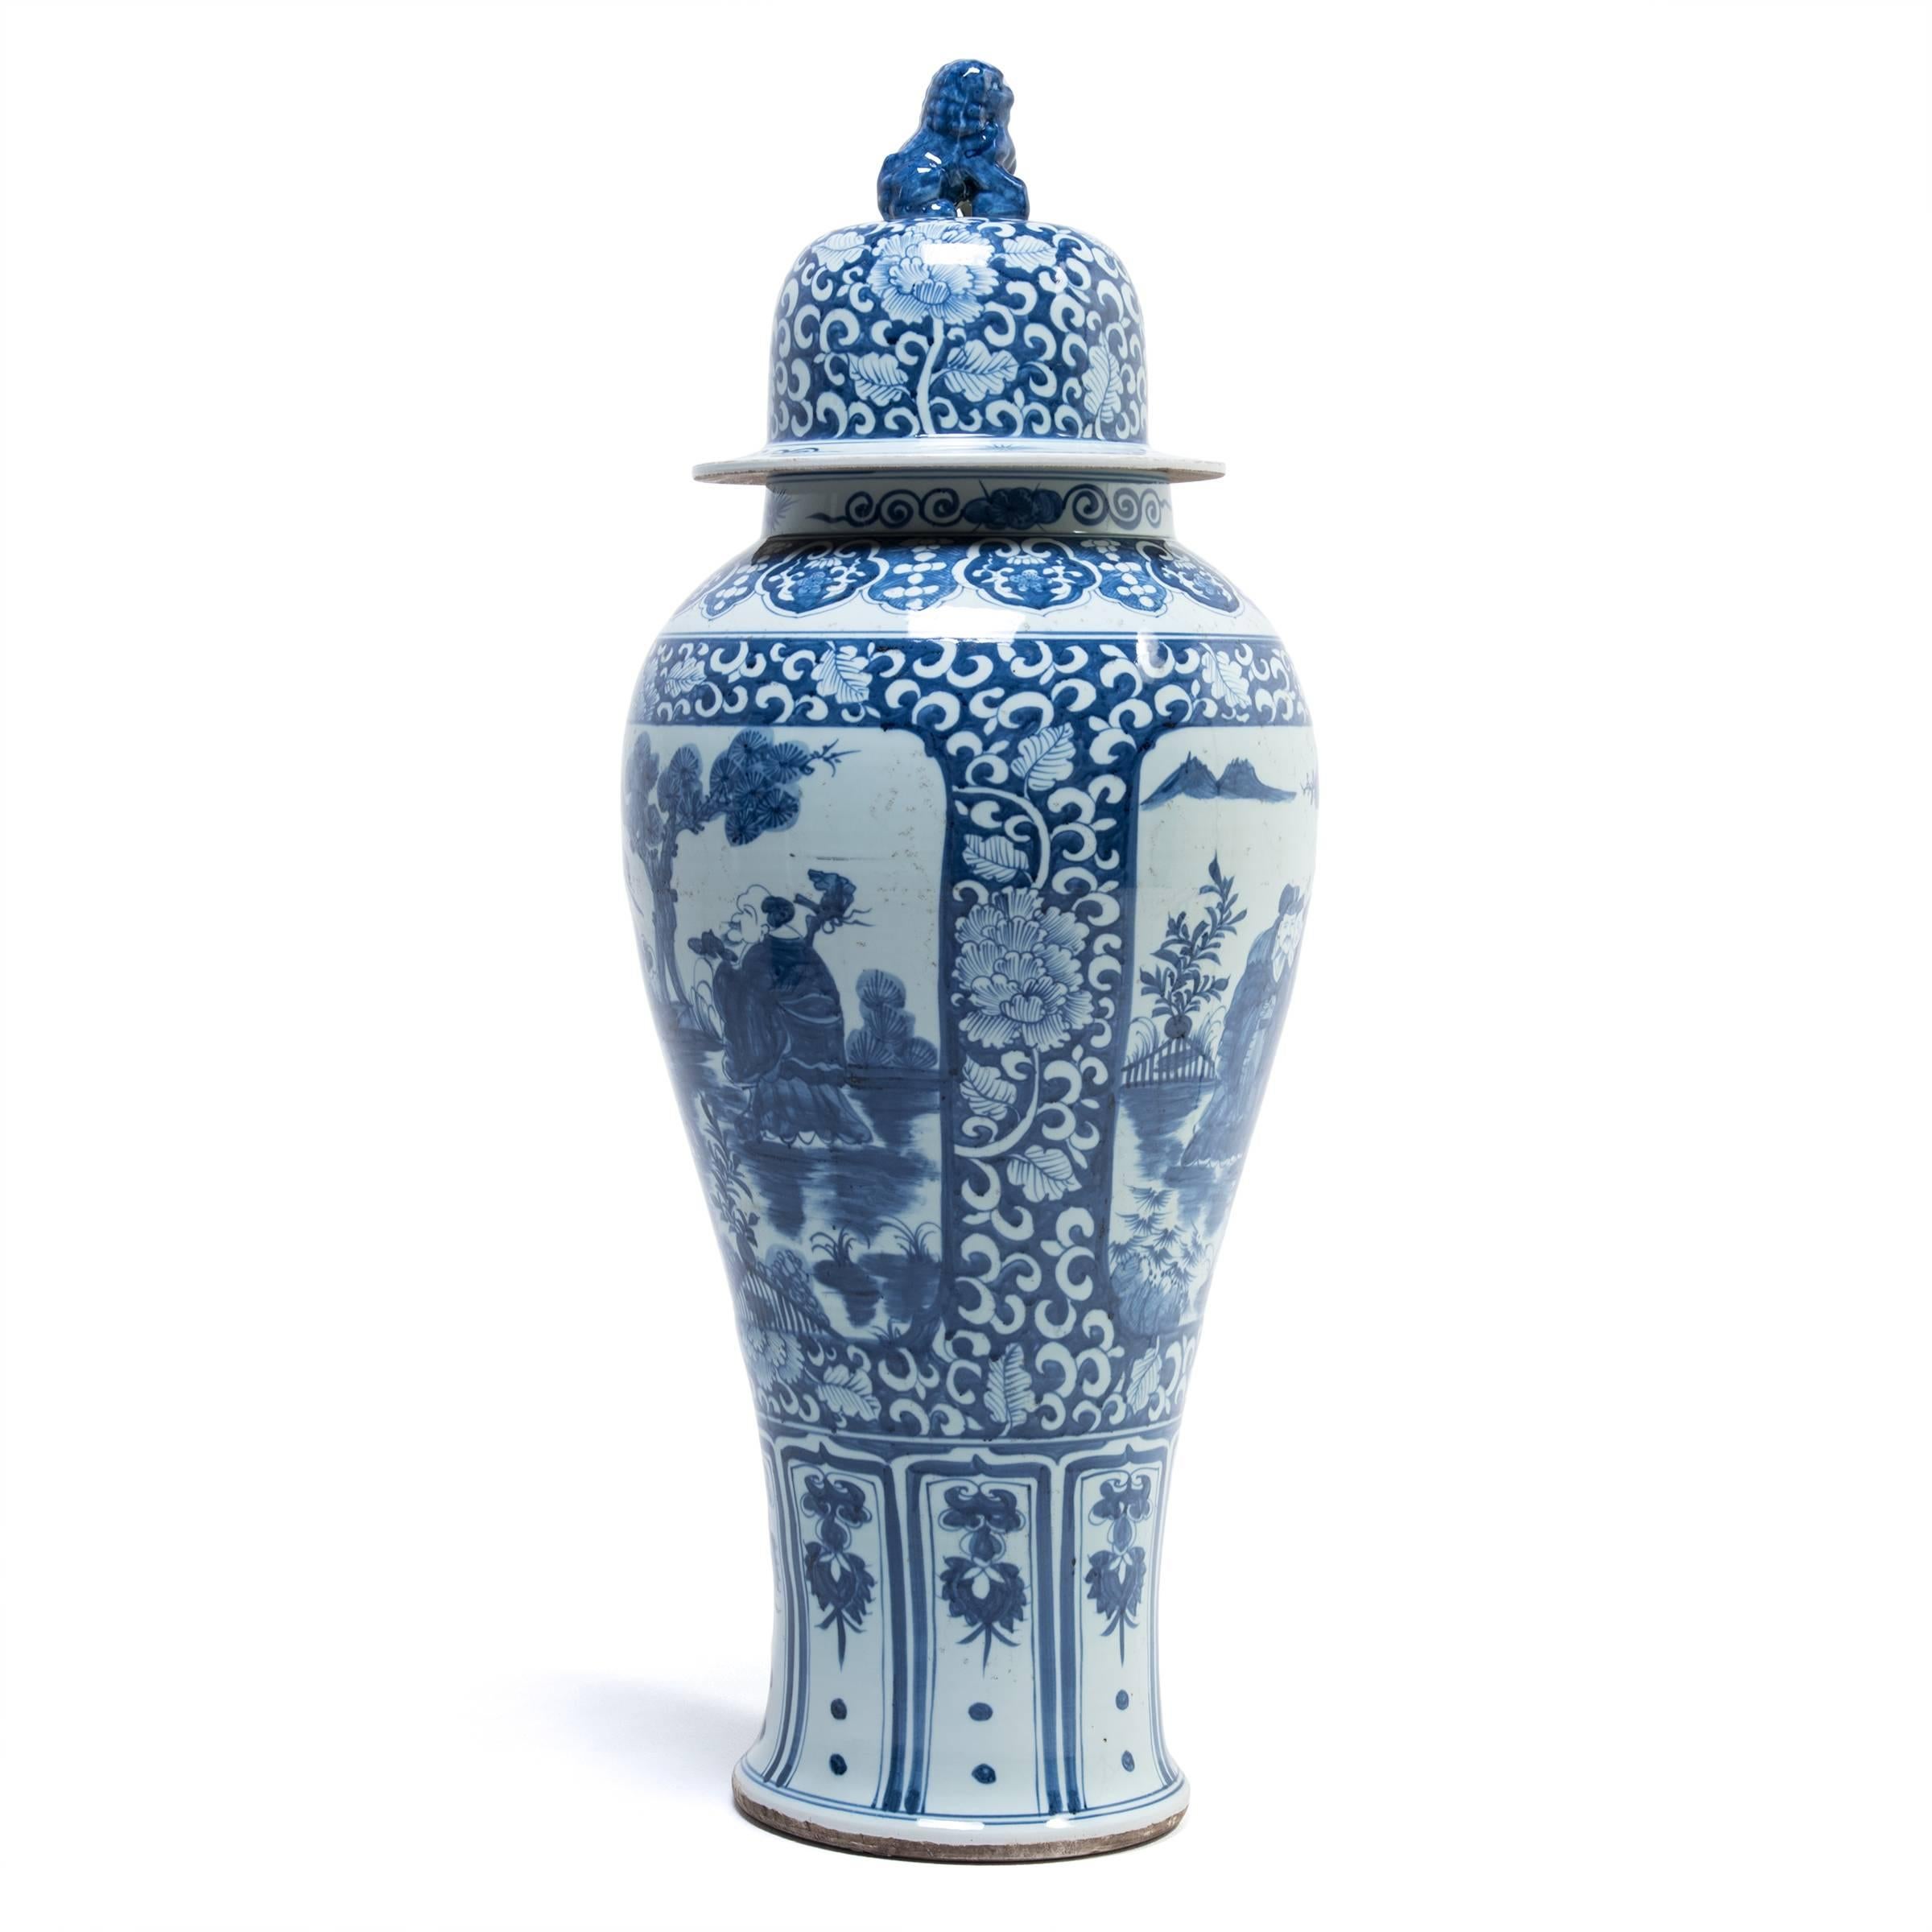 Glazed Chinese Blue and White Ginger Jar with Shizi and Landscape Portraits